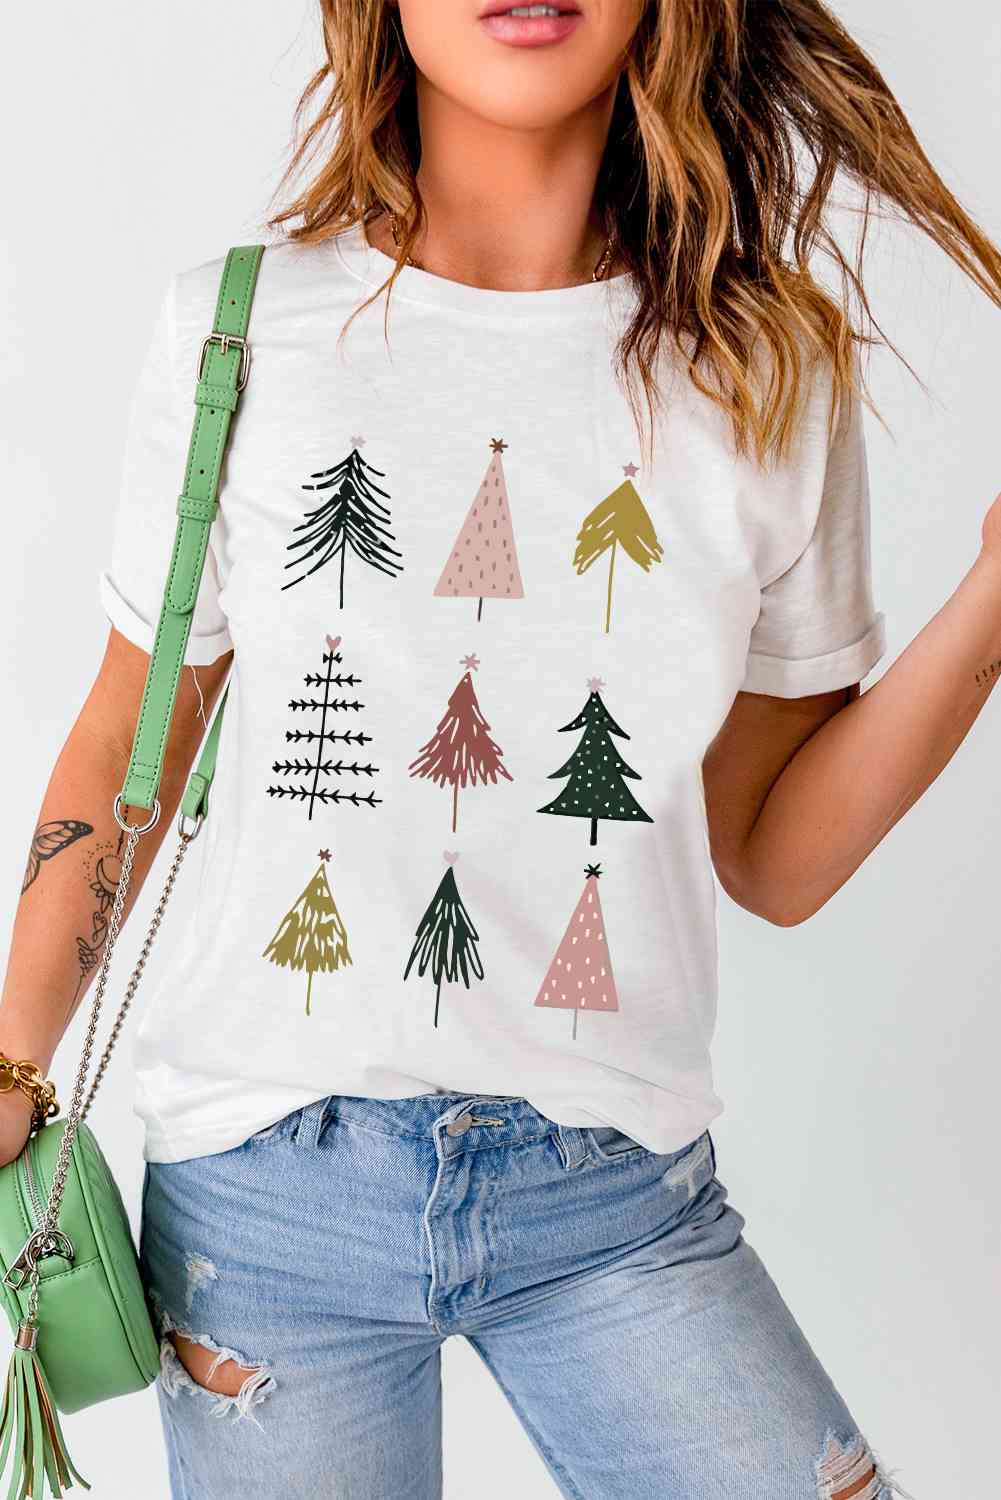 Full Size Christmas Tree Graphic Short Sleeve T-Shirt